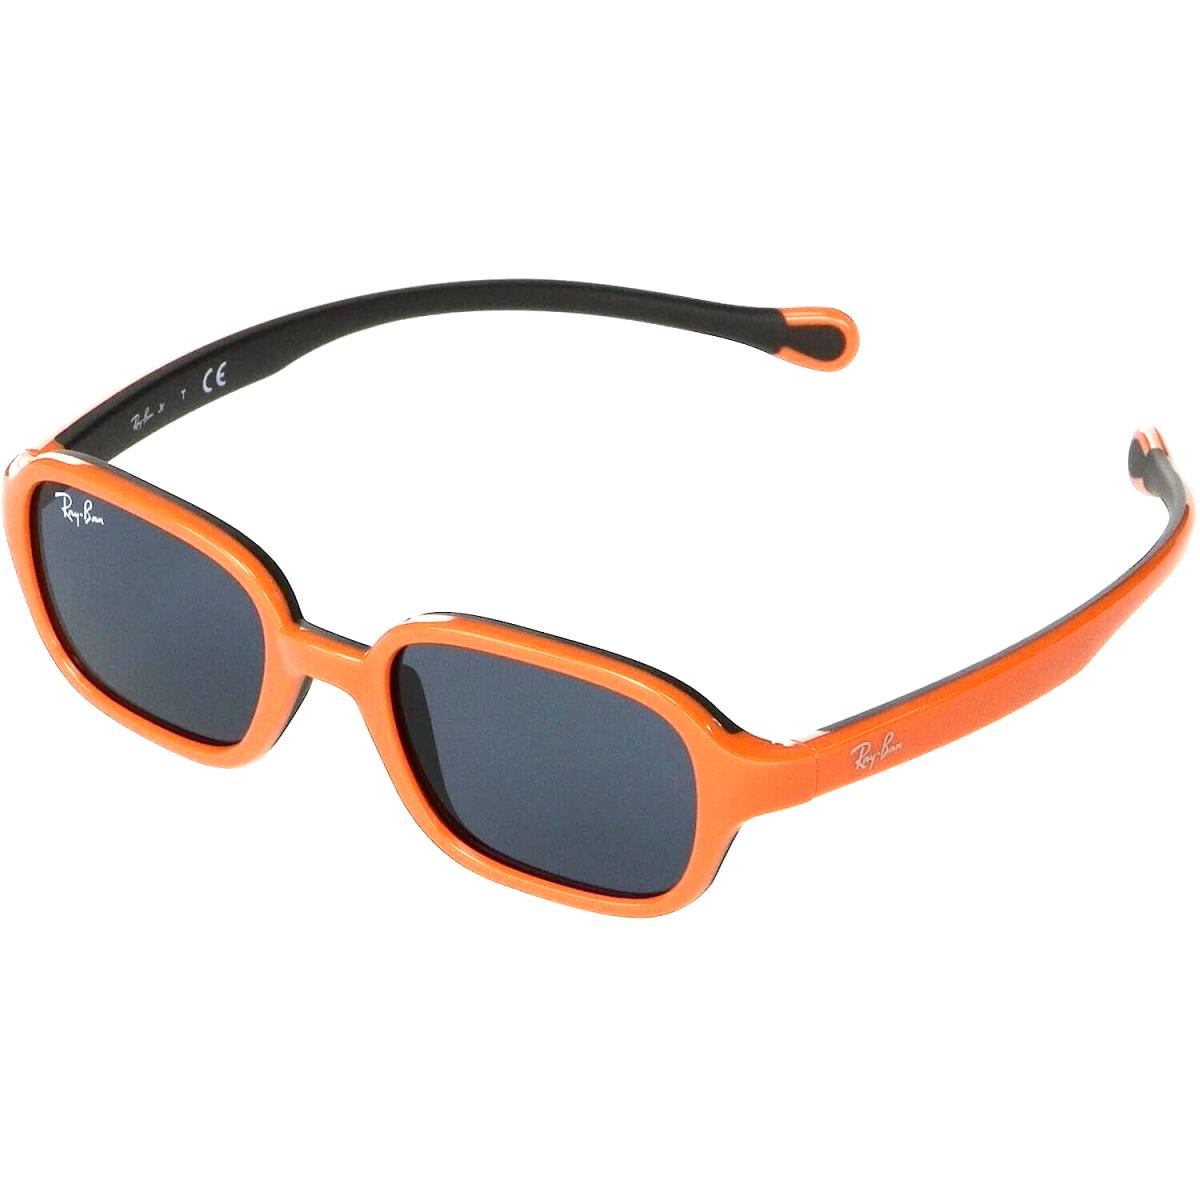 Ray Ban Kids RJ9074S 7095/80 Orange Sunglasses 41-16-130 W/case